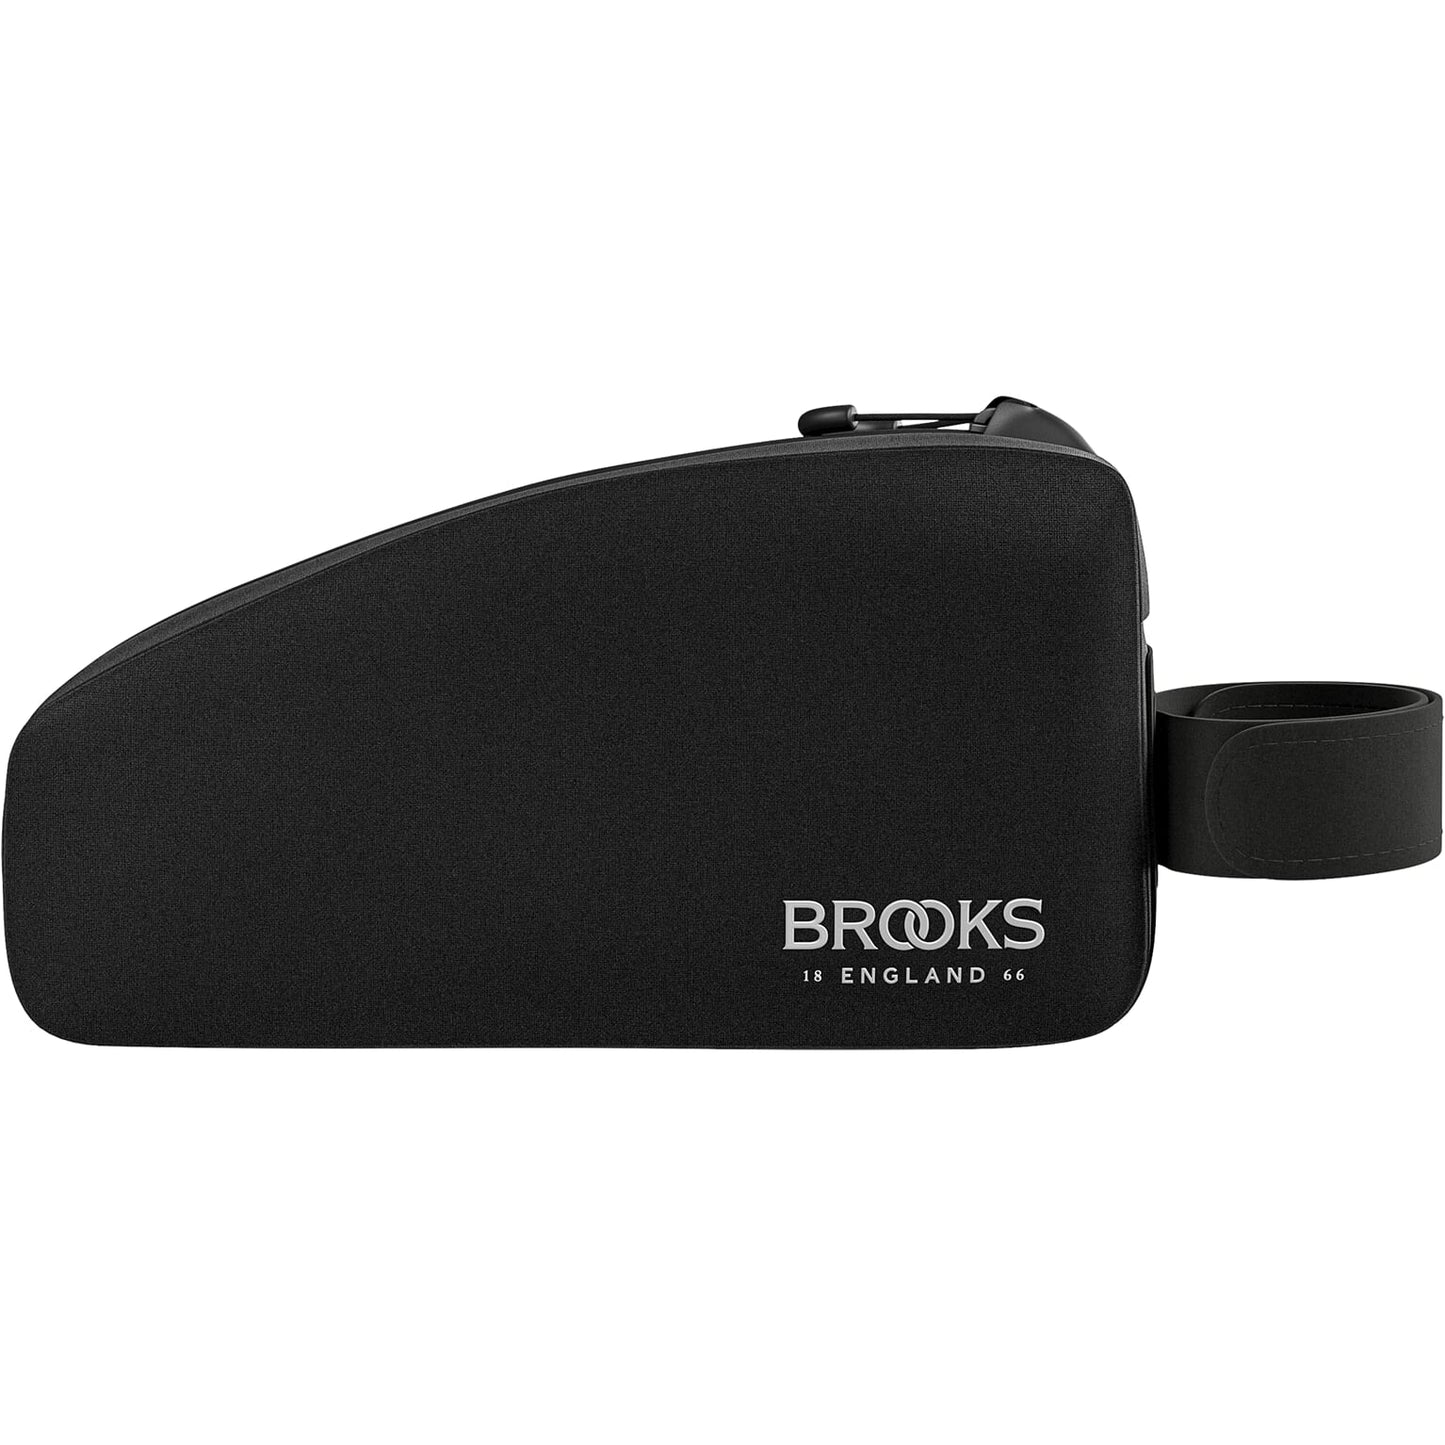 Brooks Scape Top Tuble Bag - Frametas impermeable - Negro - Accesorio para bicicletas